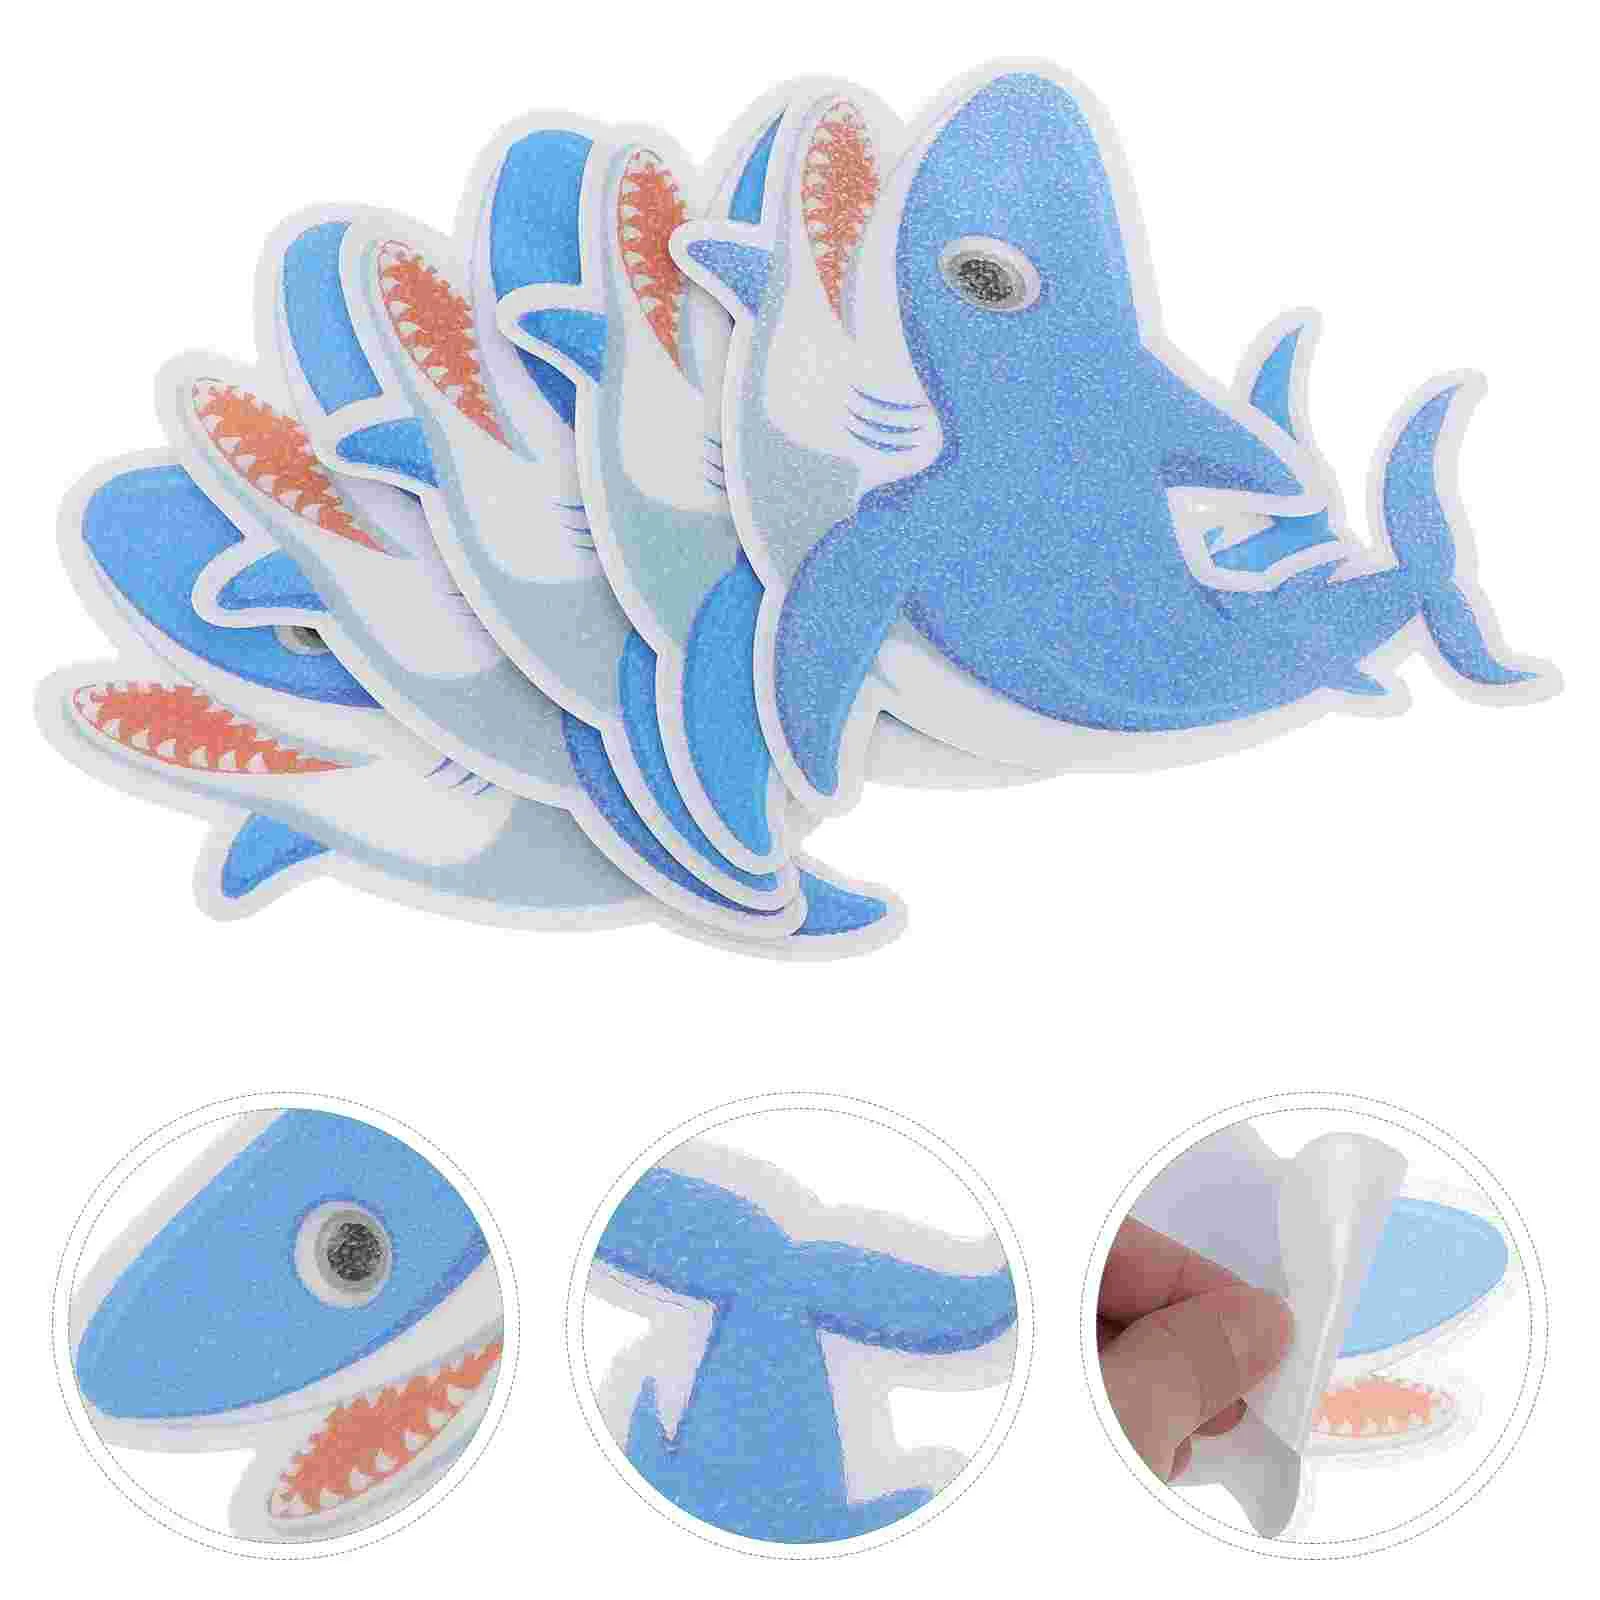 

Anti Bathsticker Stickers Sea Bathroombathtub Animal Kids Decal Shower Appliques Threads Adhesive Treads Grip Decals Tub Decor